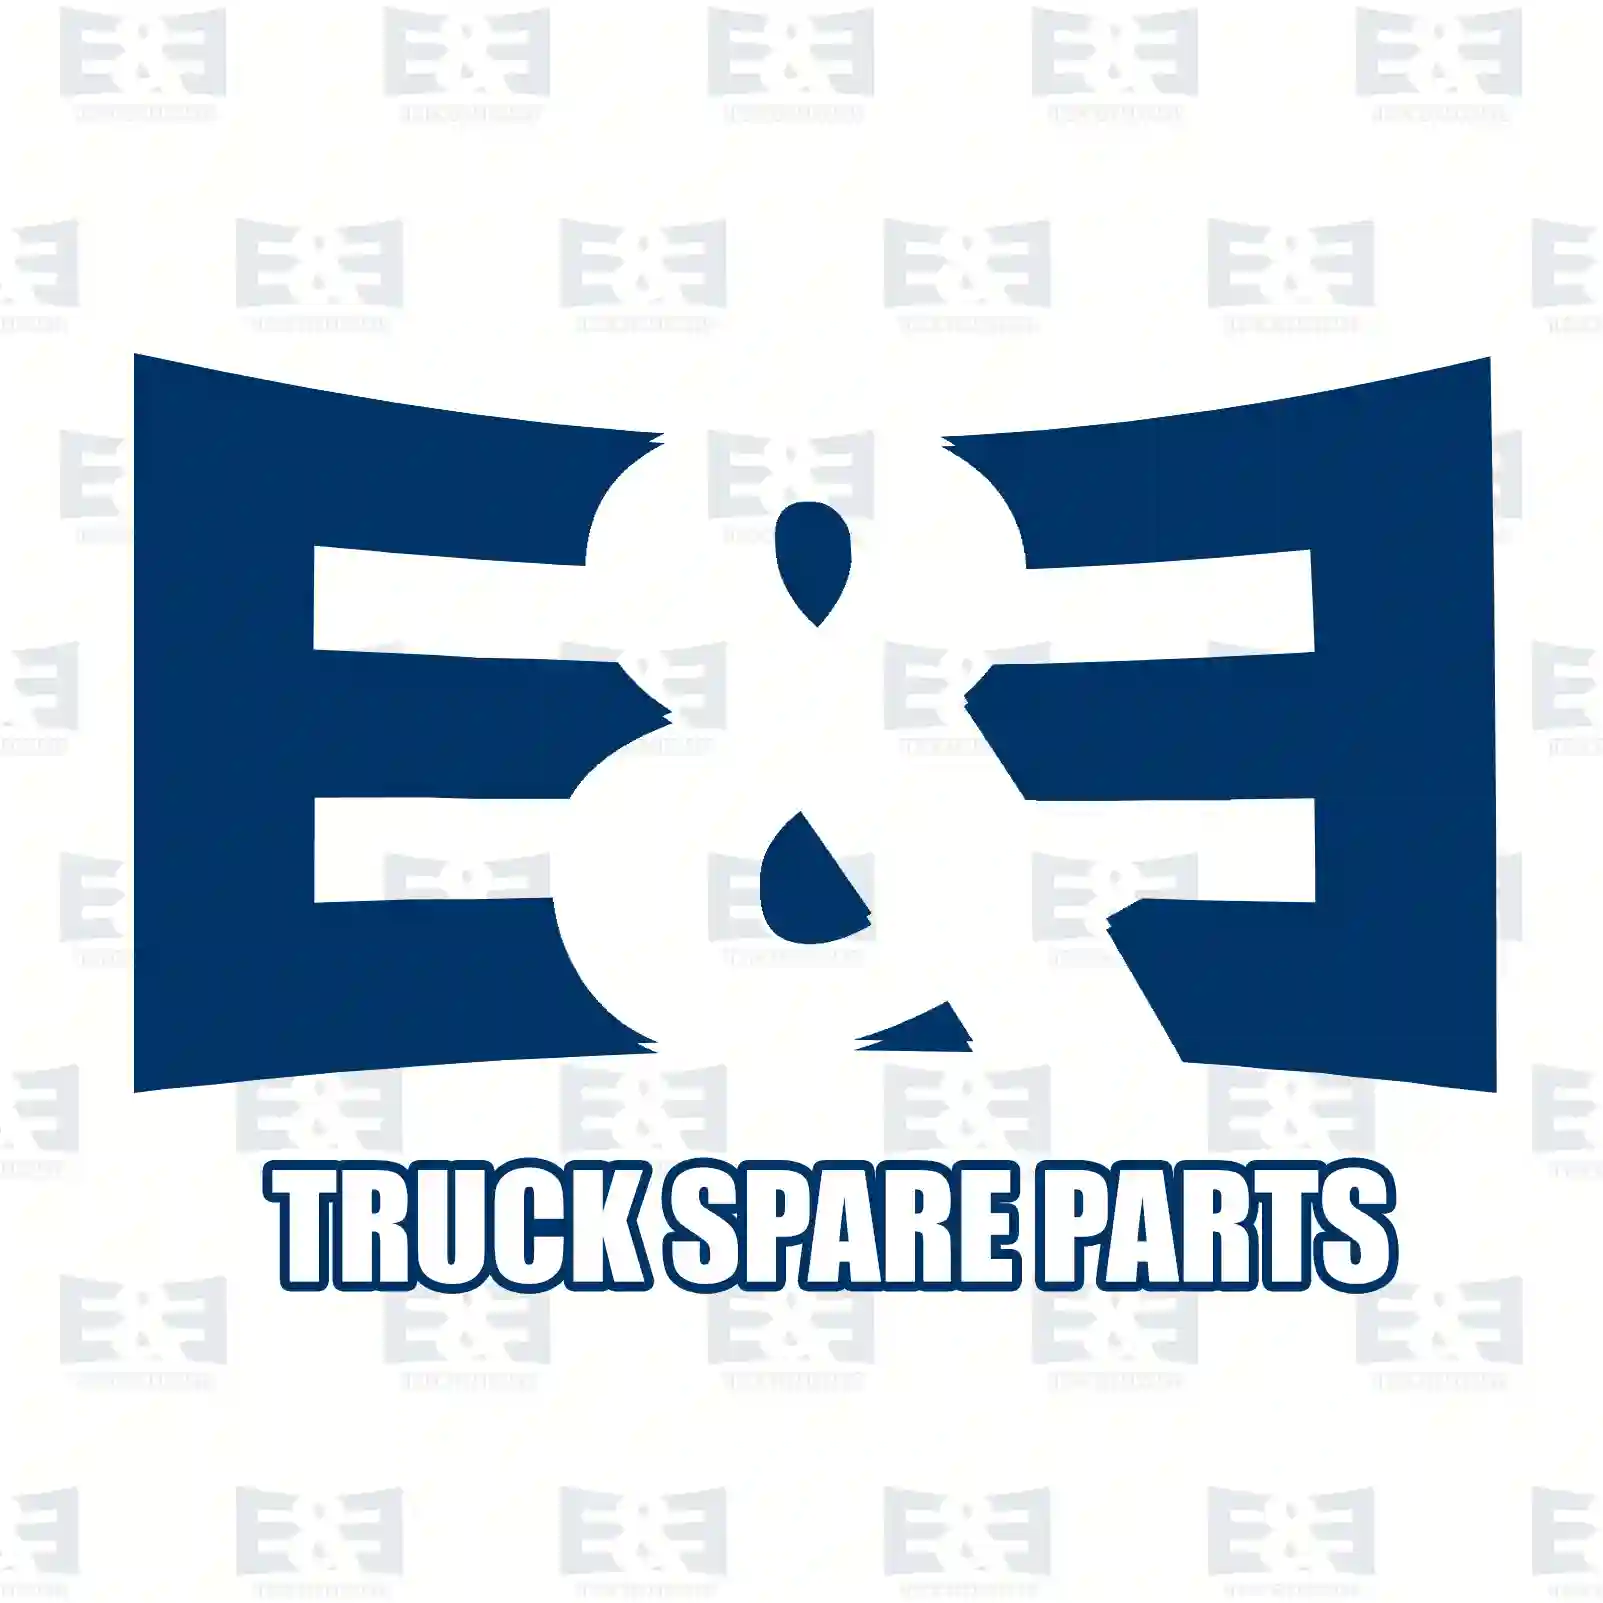 Drum brake lining kit, axle kit, 2E2294337, 0309219080, 0309219090, 0309219100, 0309219110, 0309219240, 0309219250, 0309219540, 0309219550, 0309219880, 0309219890, 0509119040, 0509119060 ||  2E2294337 E&E Truck Spare Parts | Truck Spare Parts, Auotomotive Spare Parts Drum brake lining kit, axle kit, 2E2294337, 0309219080, 0309219090, 0309219100, 0309219110, 0309219240, 0309219250, 0309219540, 0309219550, 0309219880, 0309219890, 0509119040, 0509119060 ||  2E2294337 E&E Truck Spare Parts | Truck Spare Parts, Auotomotive Spare Parts